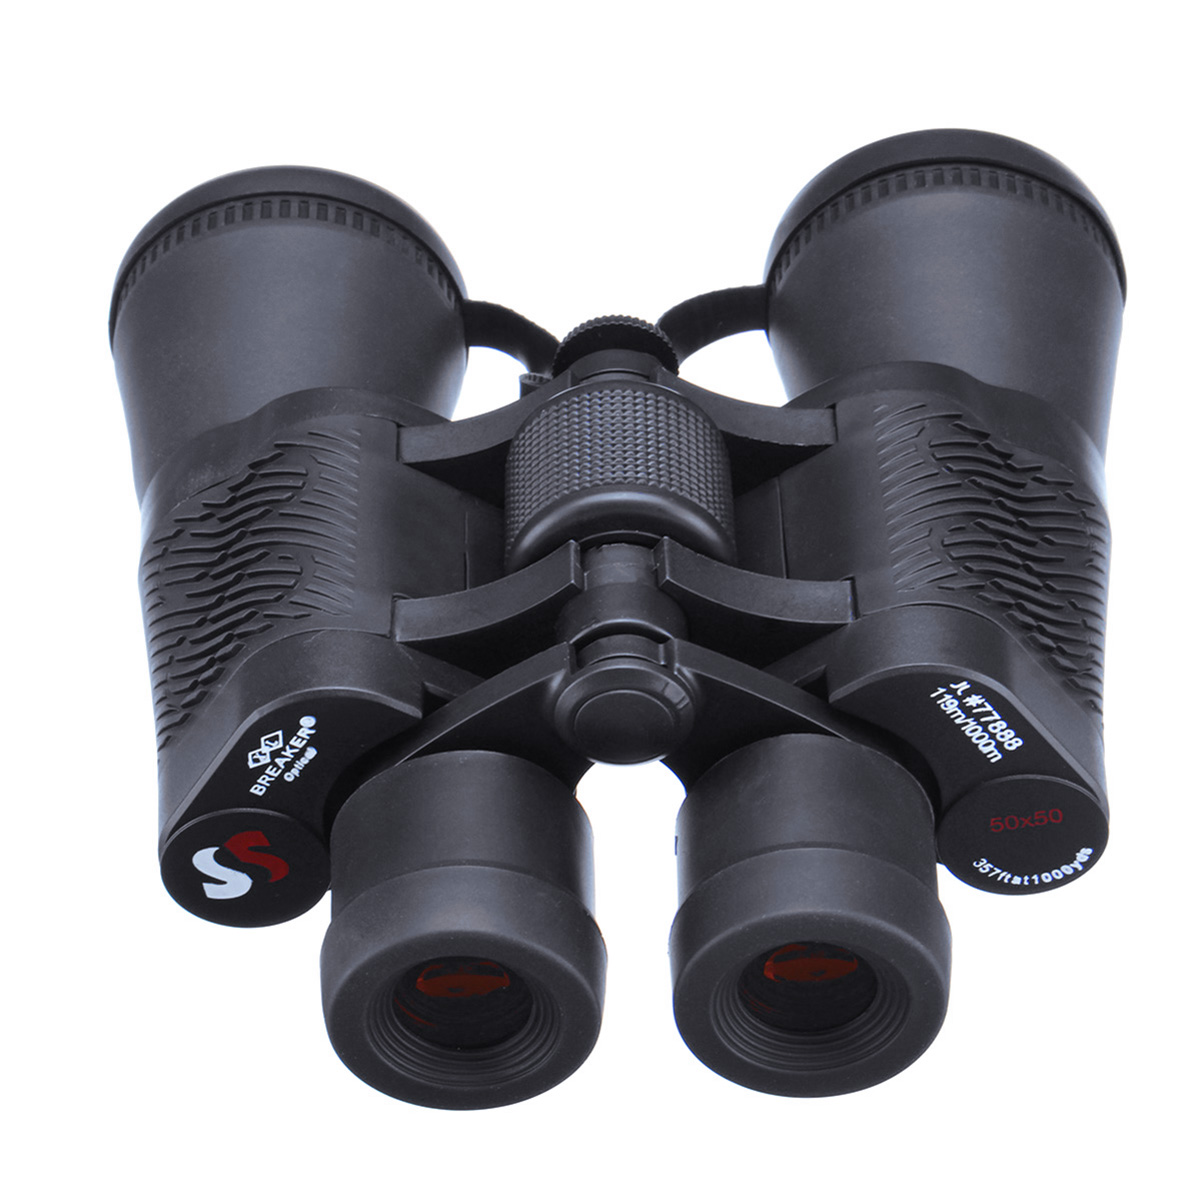 50x50-BAK4-Binocular-DayNight-Vision-Outdoor-Traveling-Camping-Telescope-1612999-7